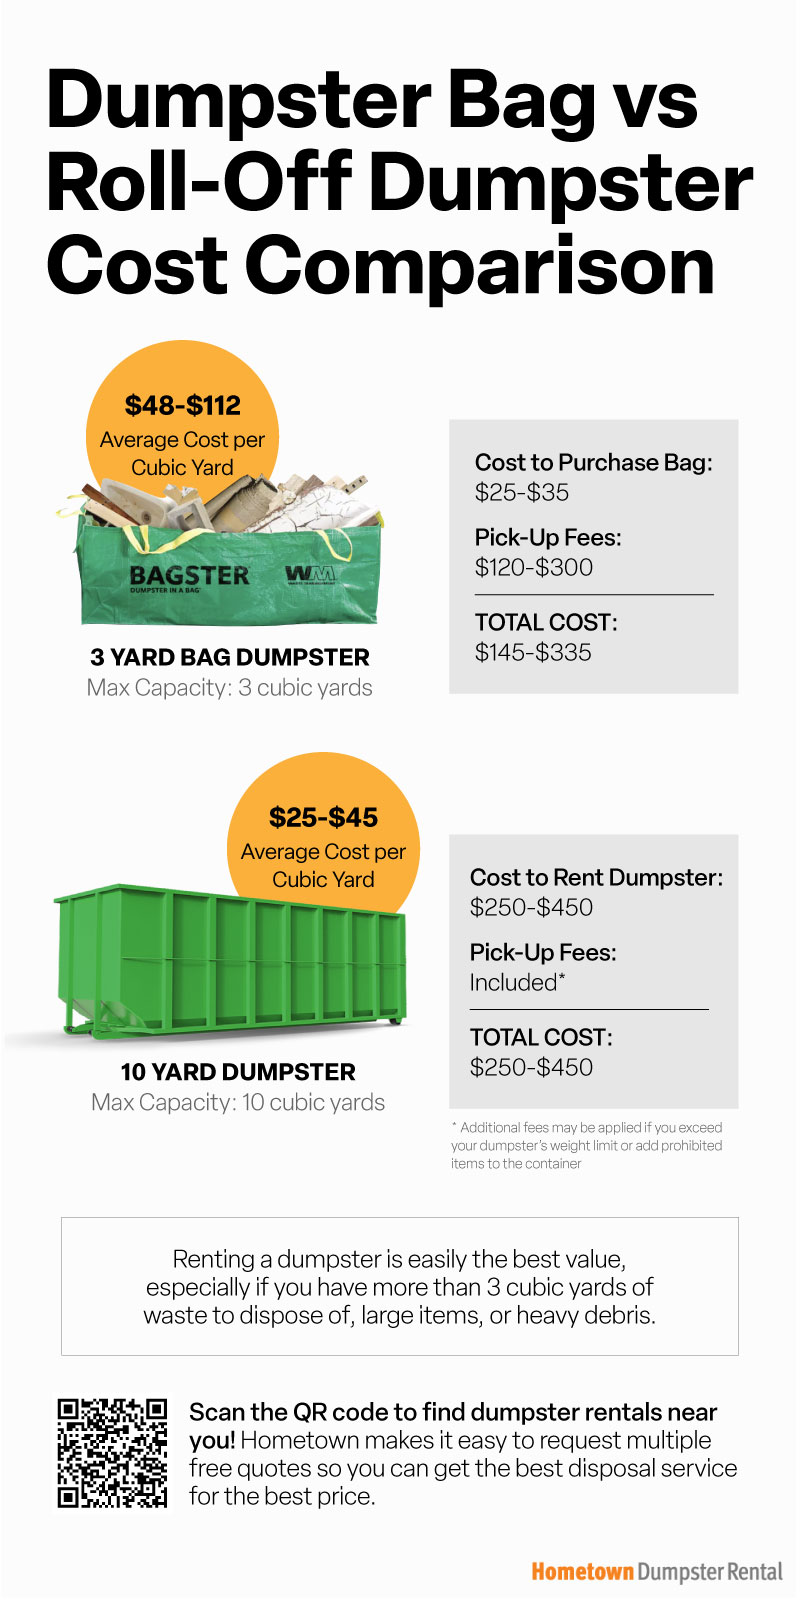 https://www.hometowndumpsterrental.com/static/f0bb78fbfc44c437121b28086b96246f/bag-dumpster-vs-dumpster-costs-infographic.jpg